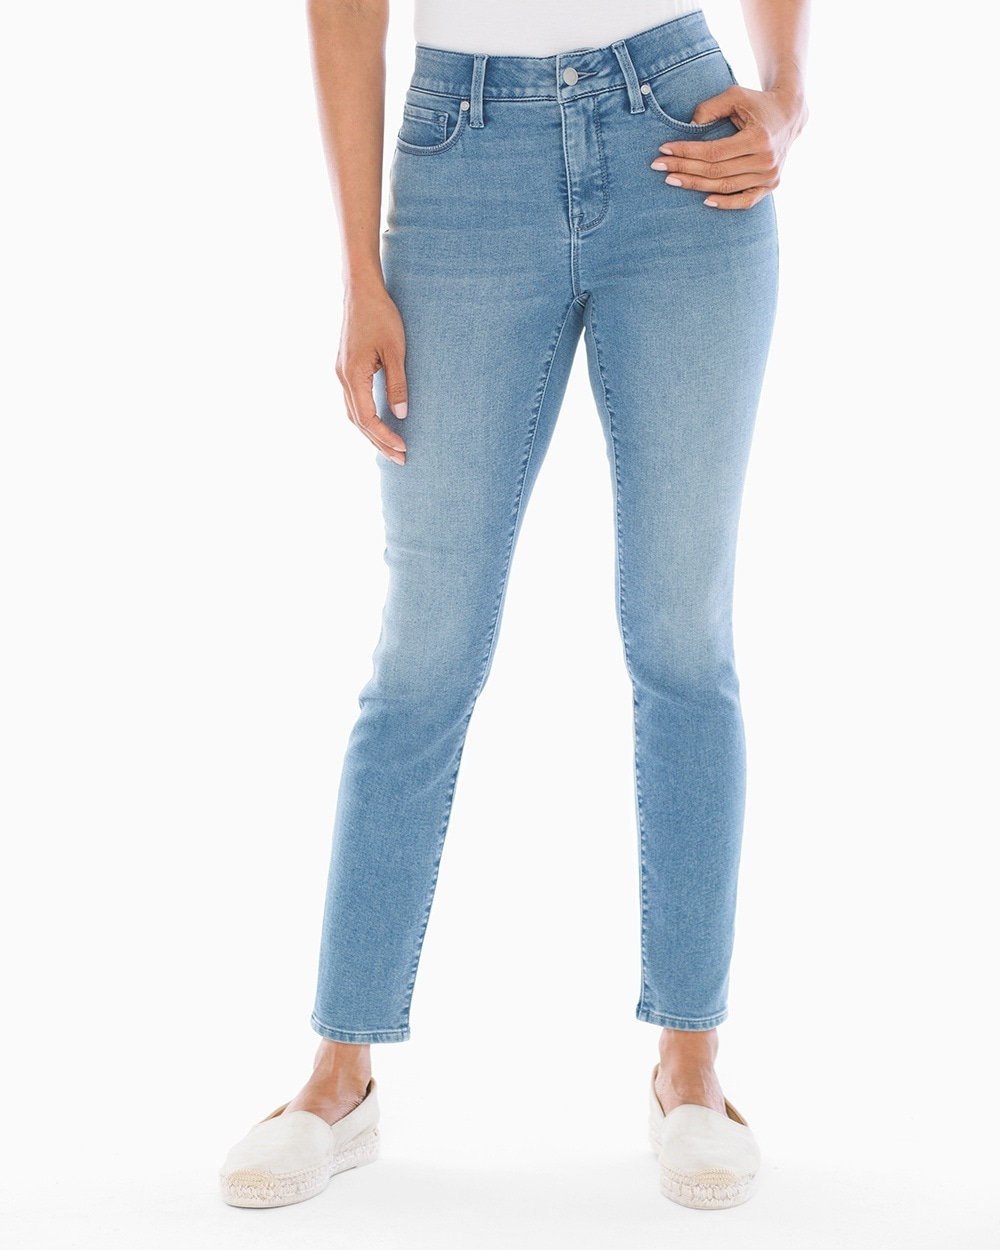 Style Essentials Slimming 5 Pocket Jeans Light Wash RG